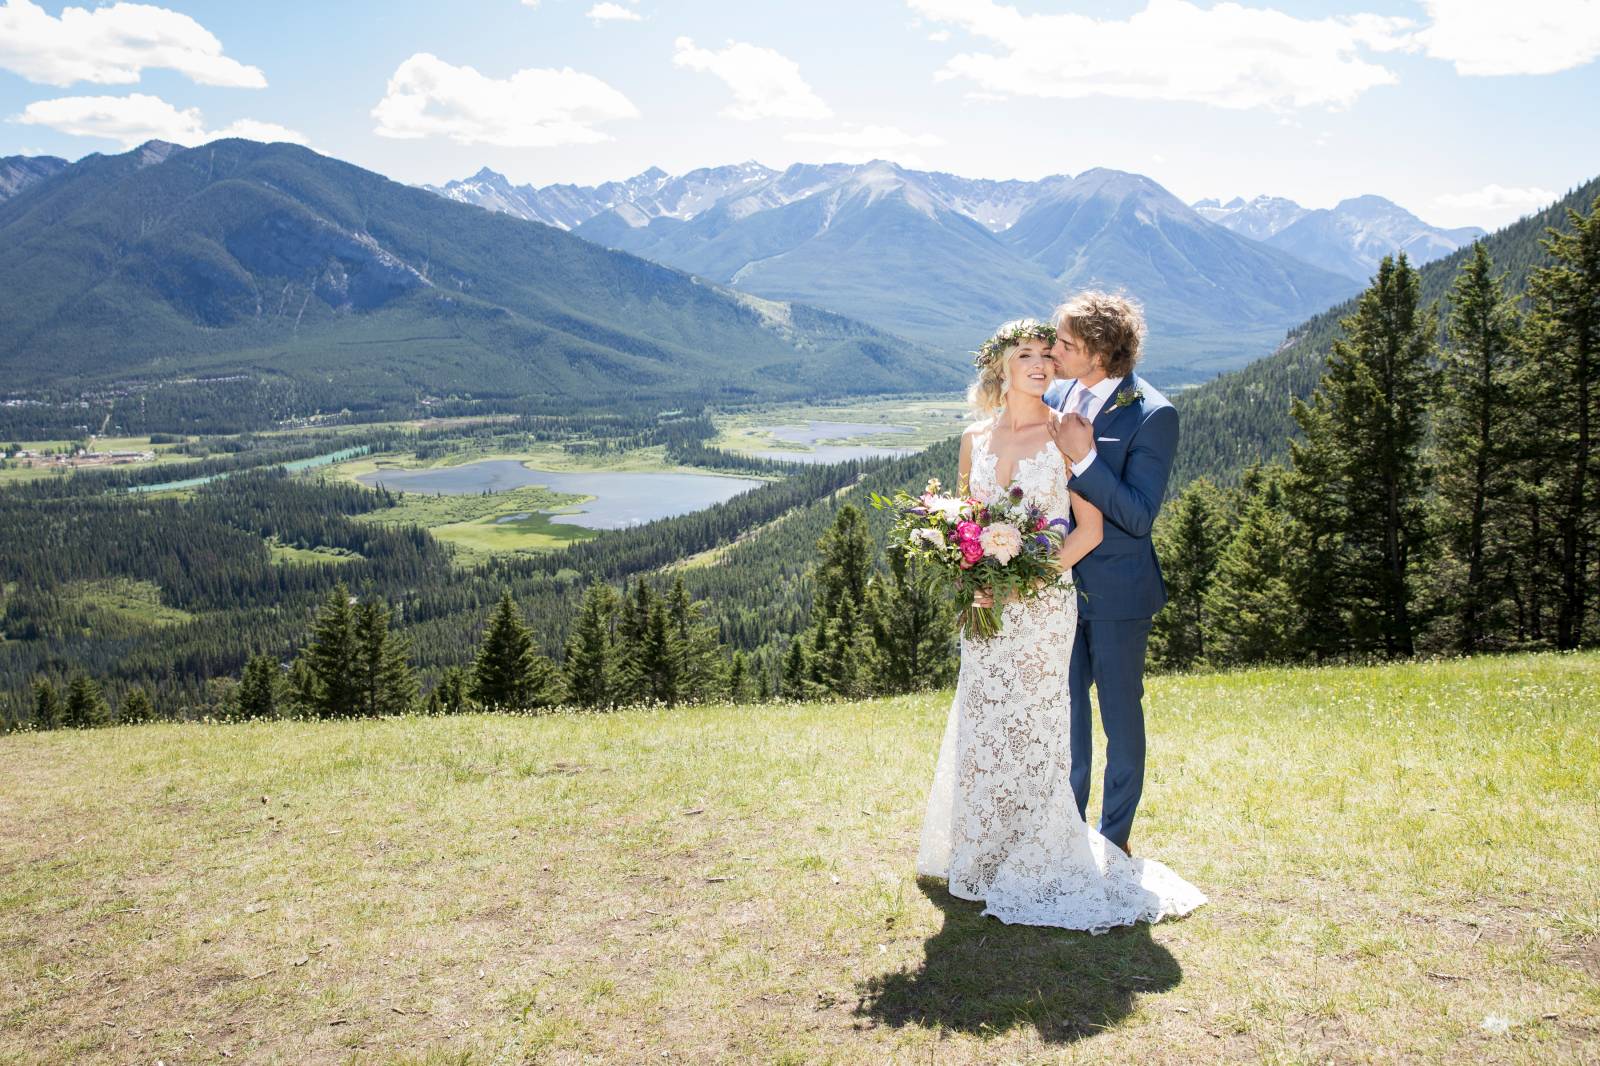 Banff Norquay Lookout, Banff Norquay Wedding Ceremony, Outdoor elopement location, Banff Norquay elo